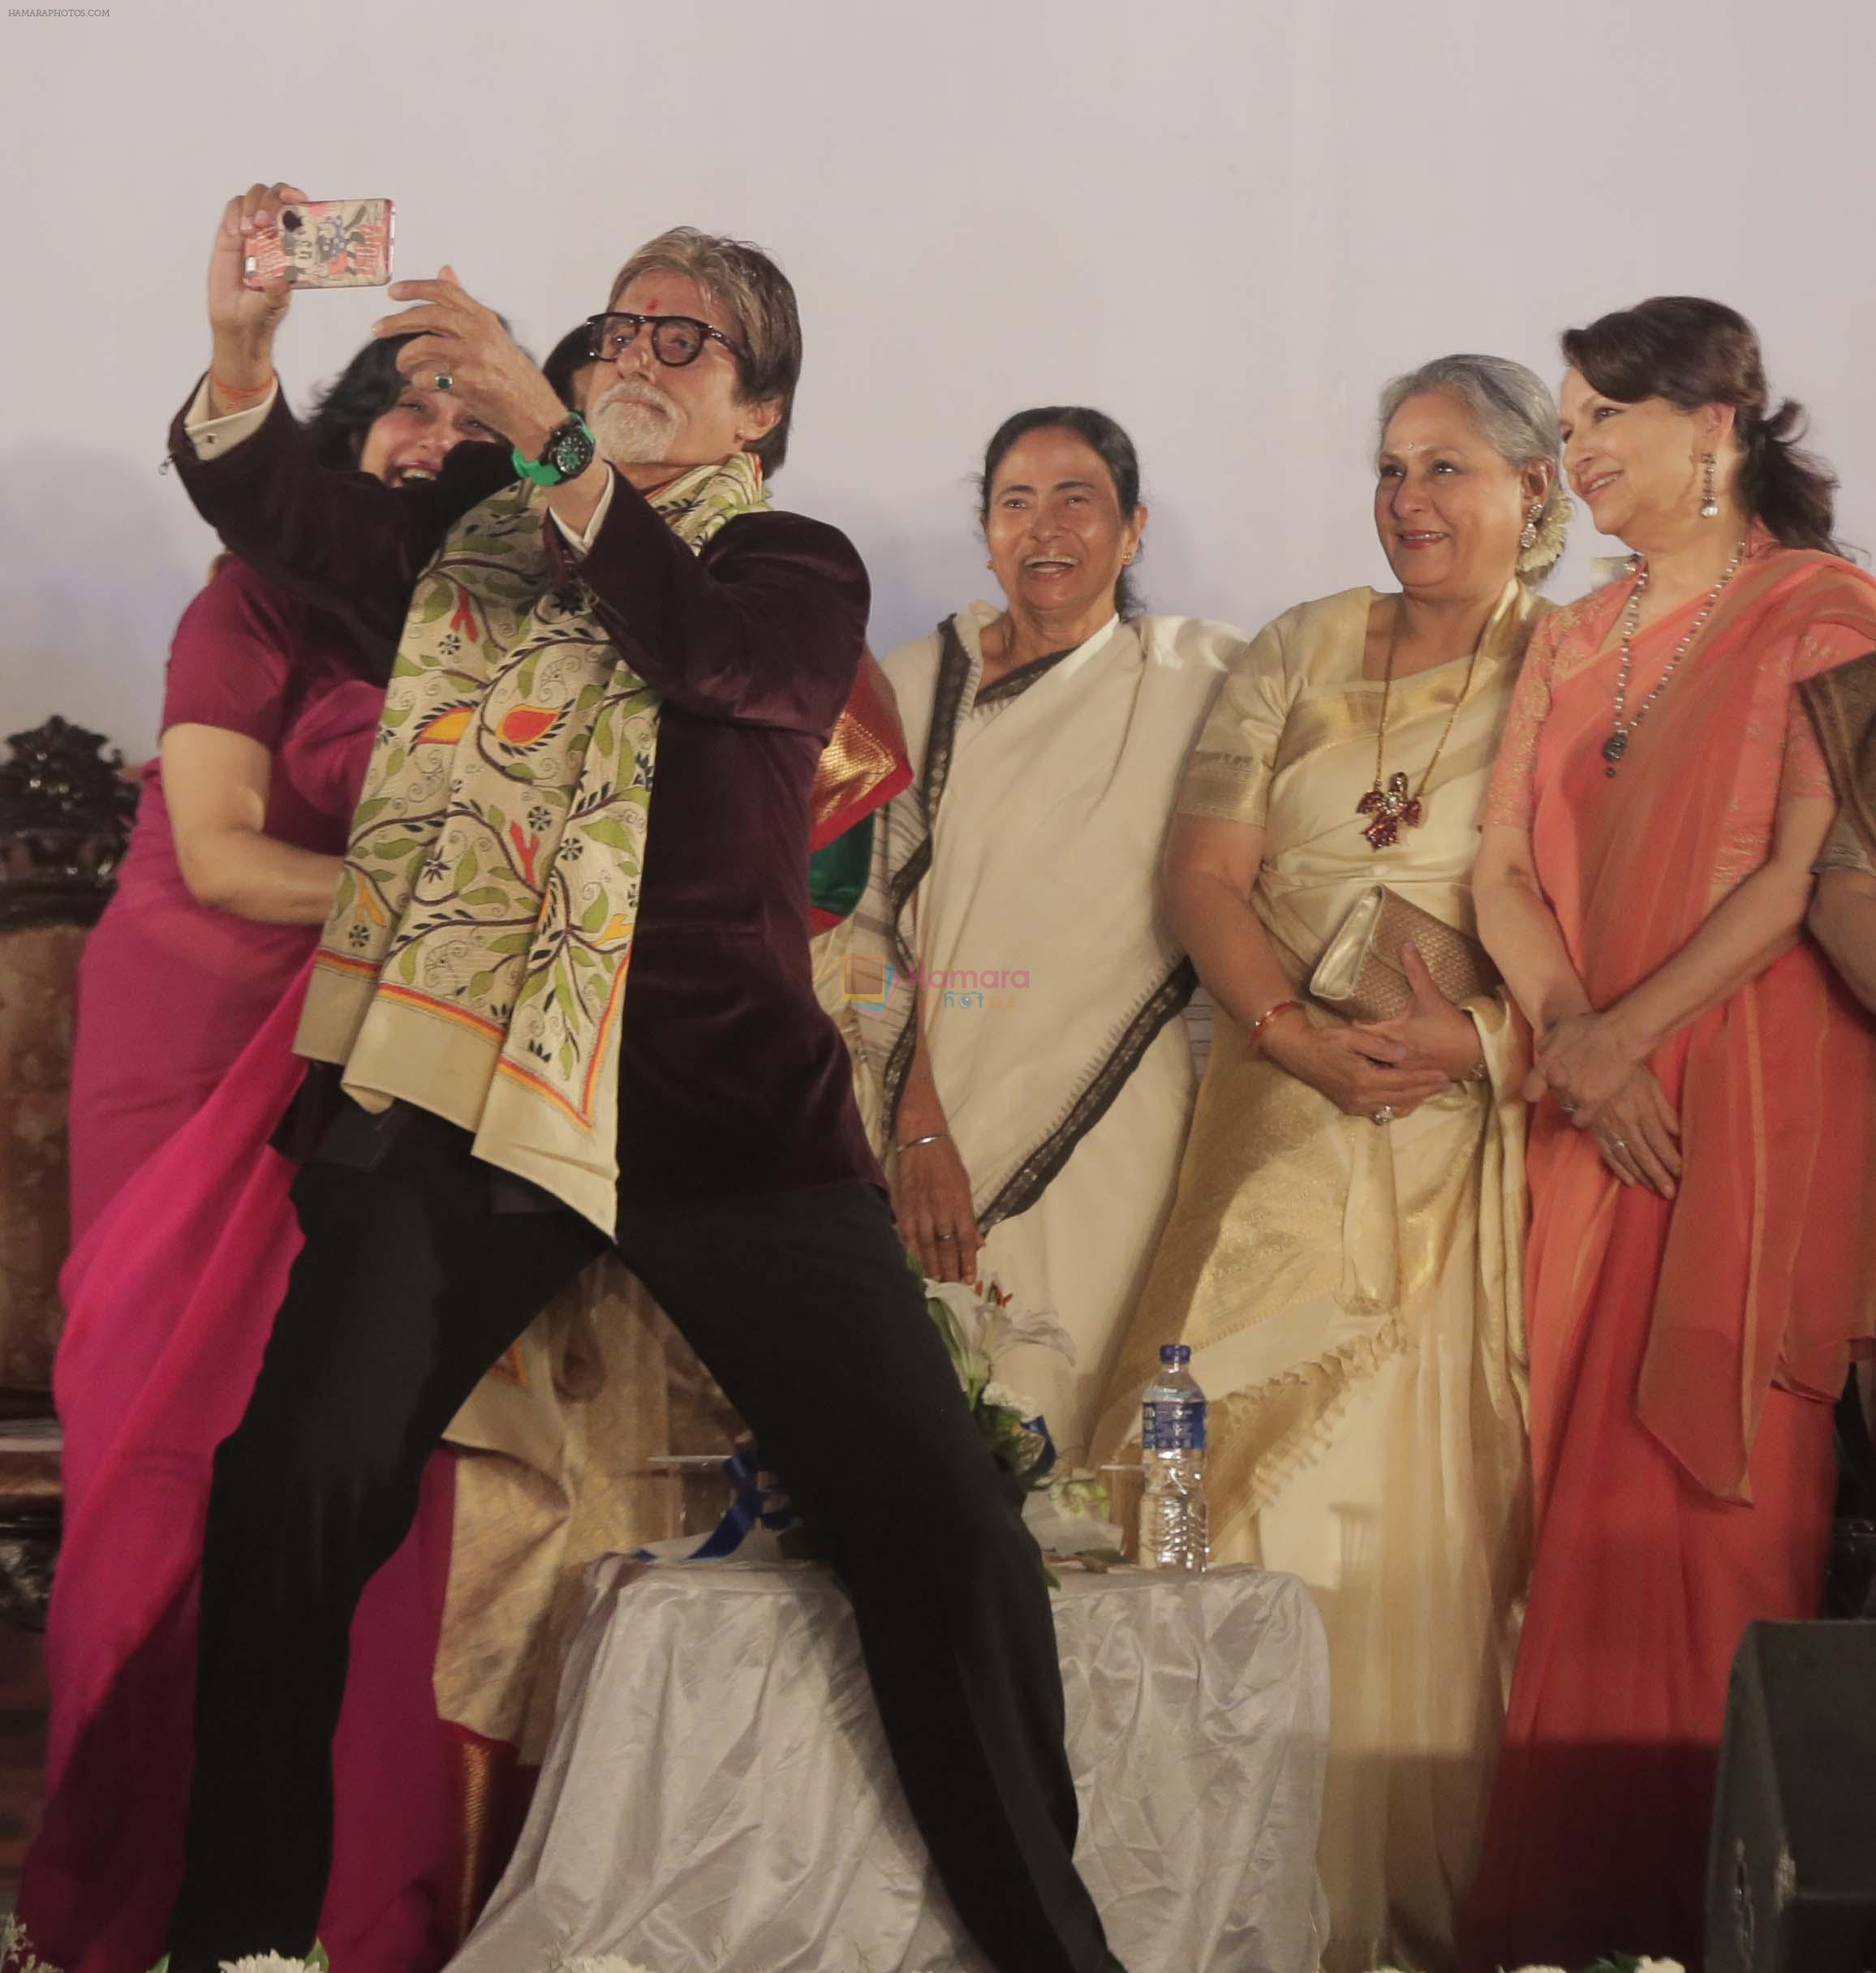 Amitabh Bachchan at 21st Kolkata International Film Fastival on 14th Nov 2015